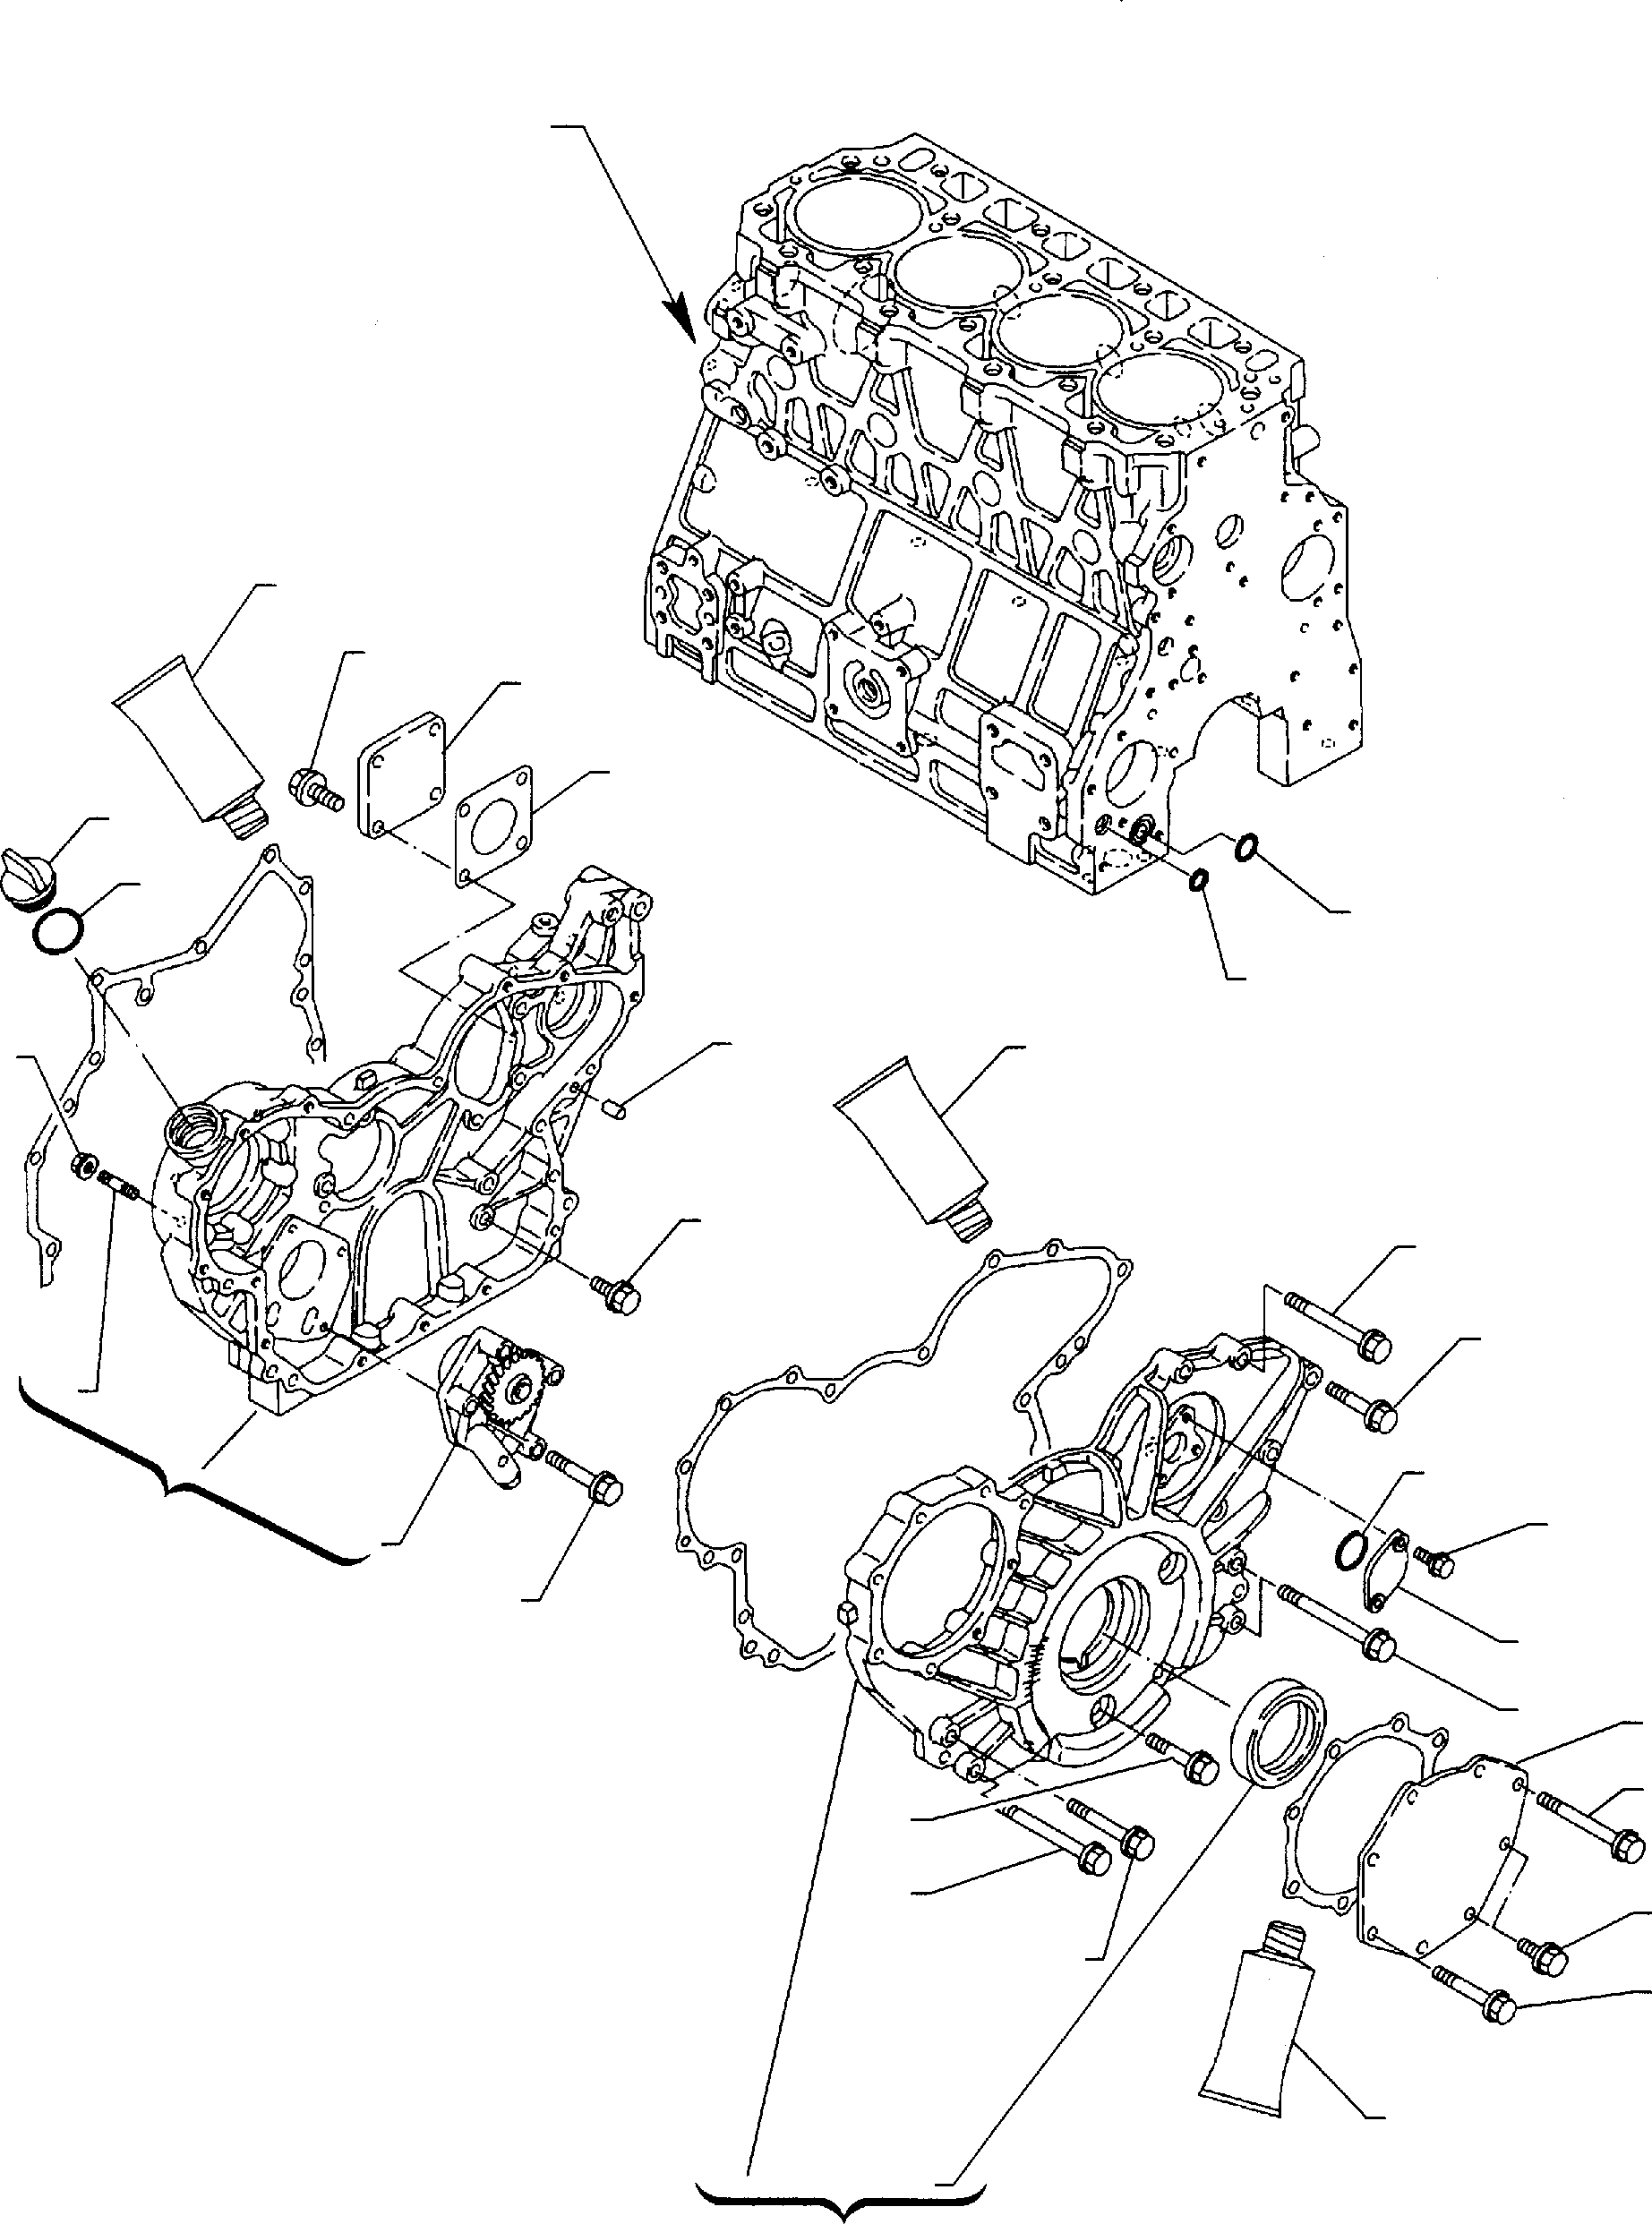 Part 11. GEAR HOUSING (TURBO ENGINE) [0216]